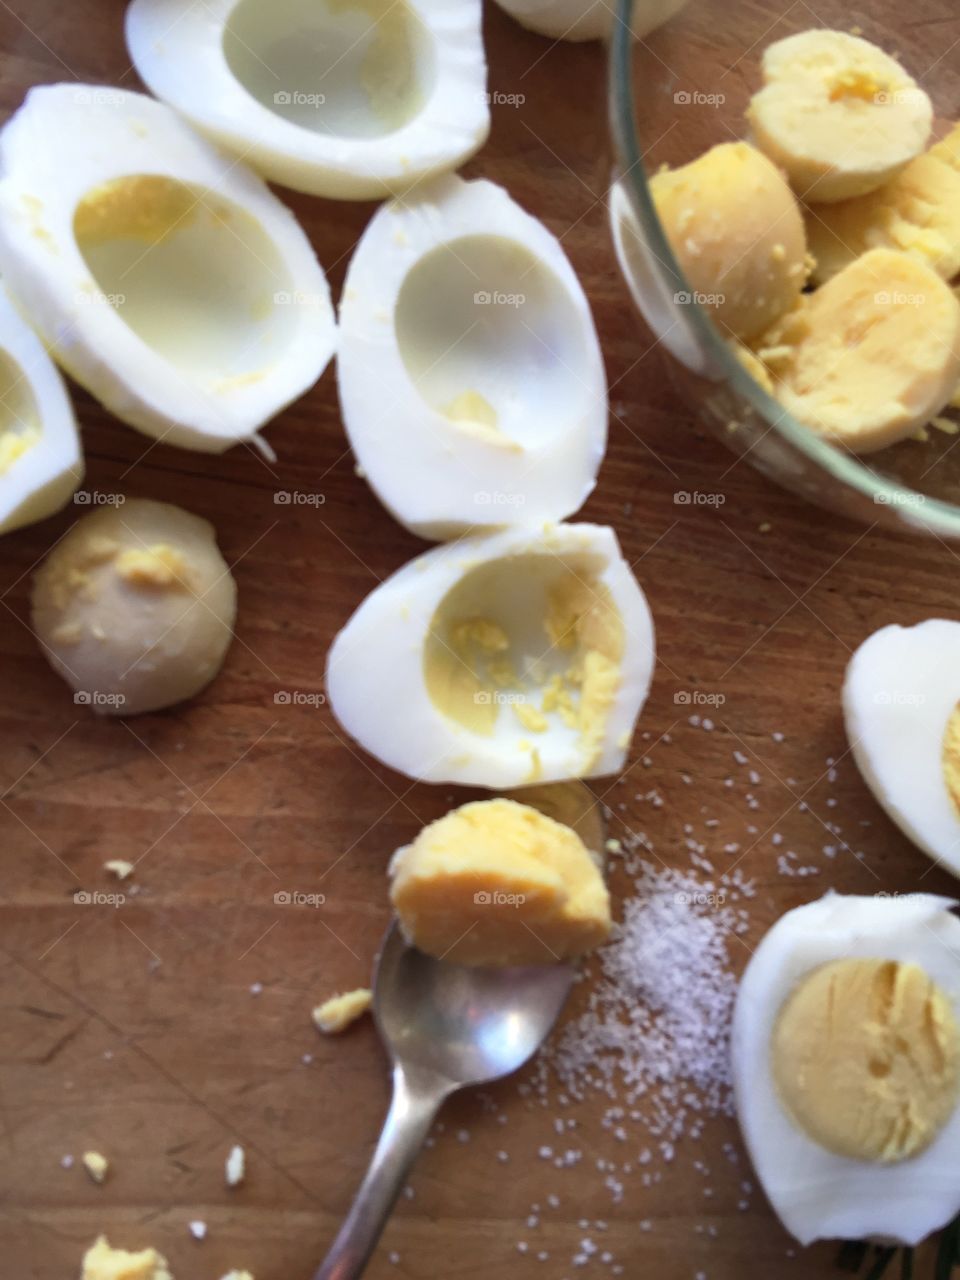 Removing yolks from boiled egg